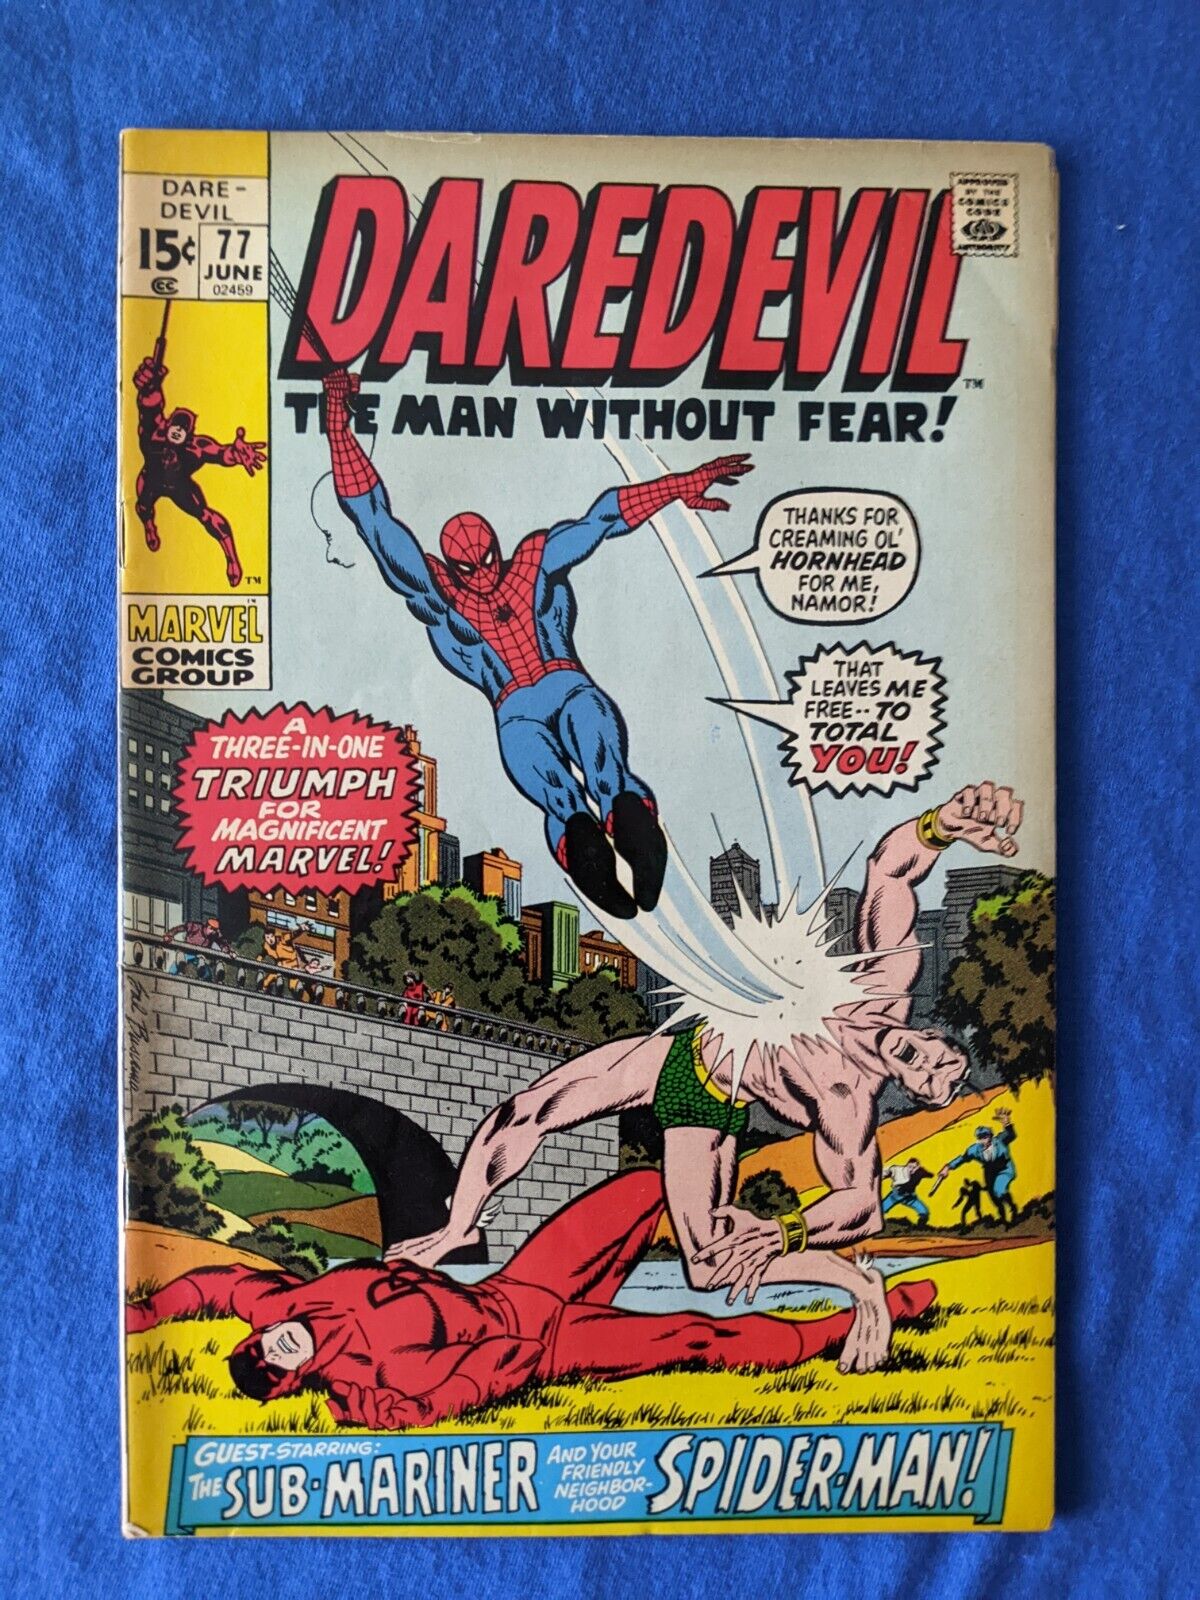 DAREDEVIL #77 (June 1971) Marvel Bronze Age classic, Spider-Man and Sub-Mariner